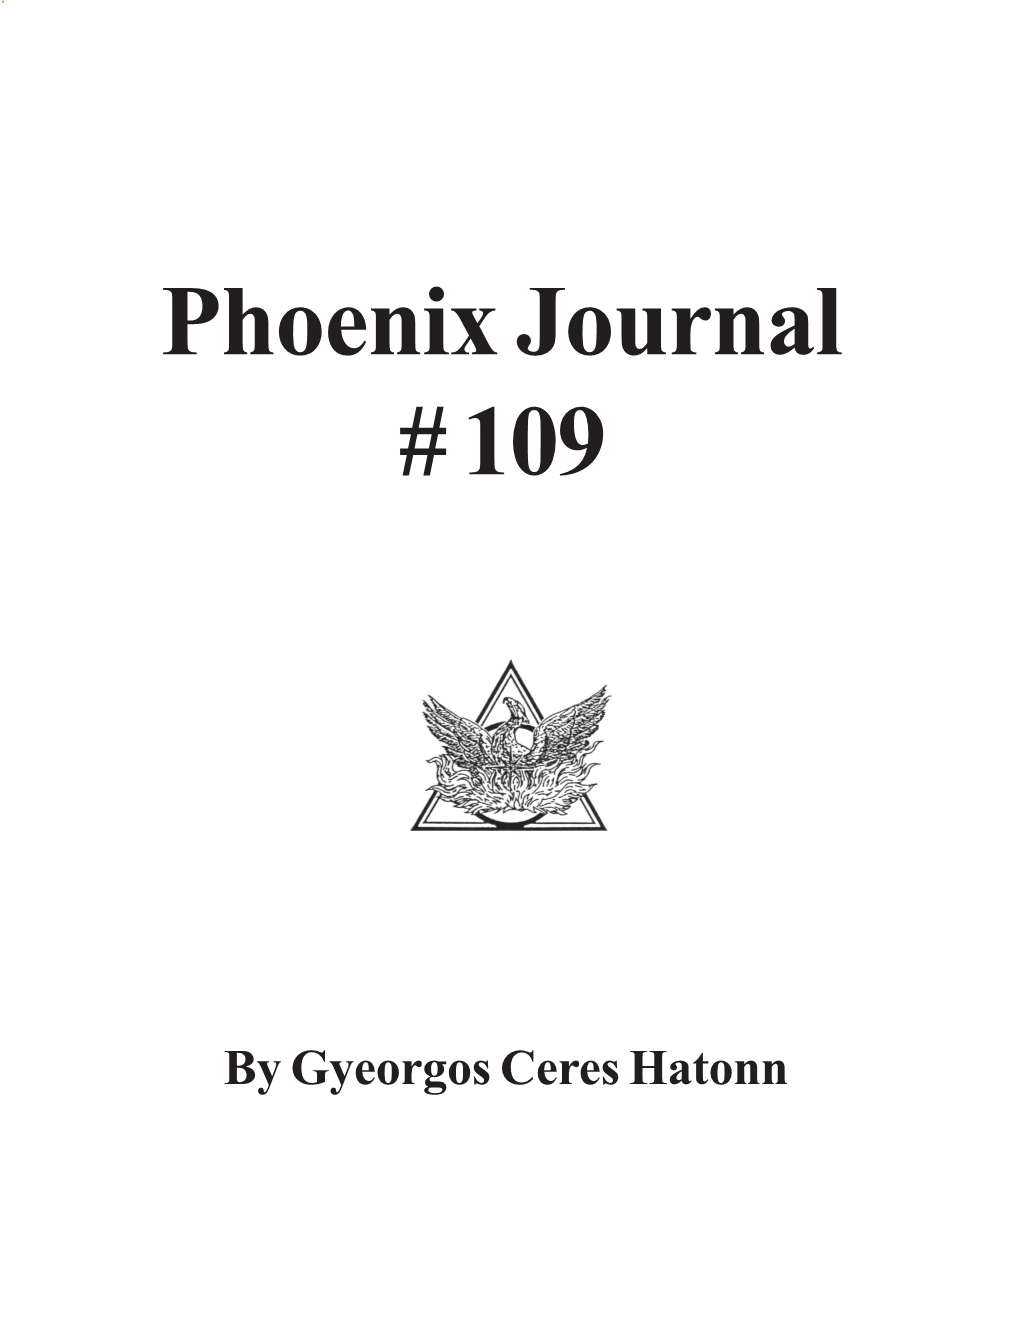 Phoenix Journal # 109